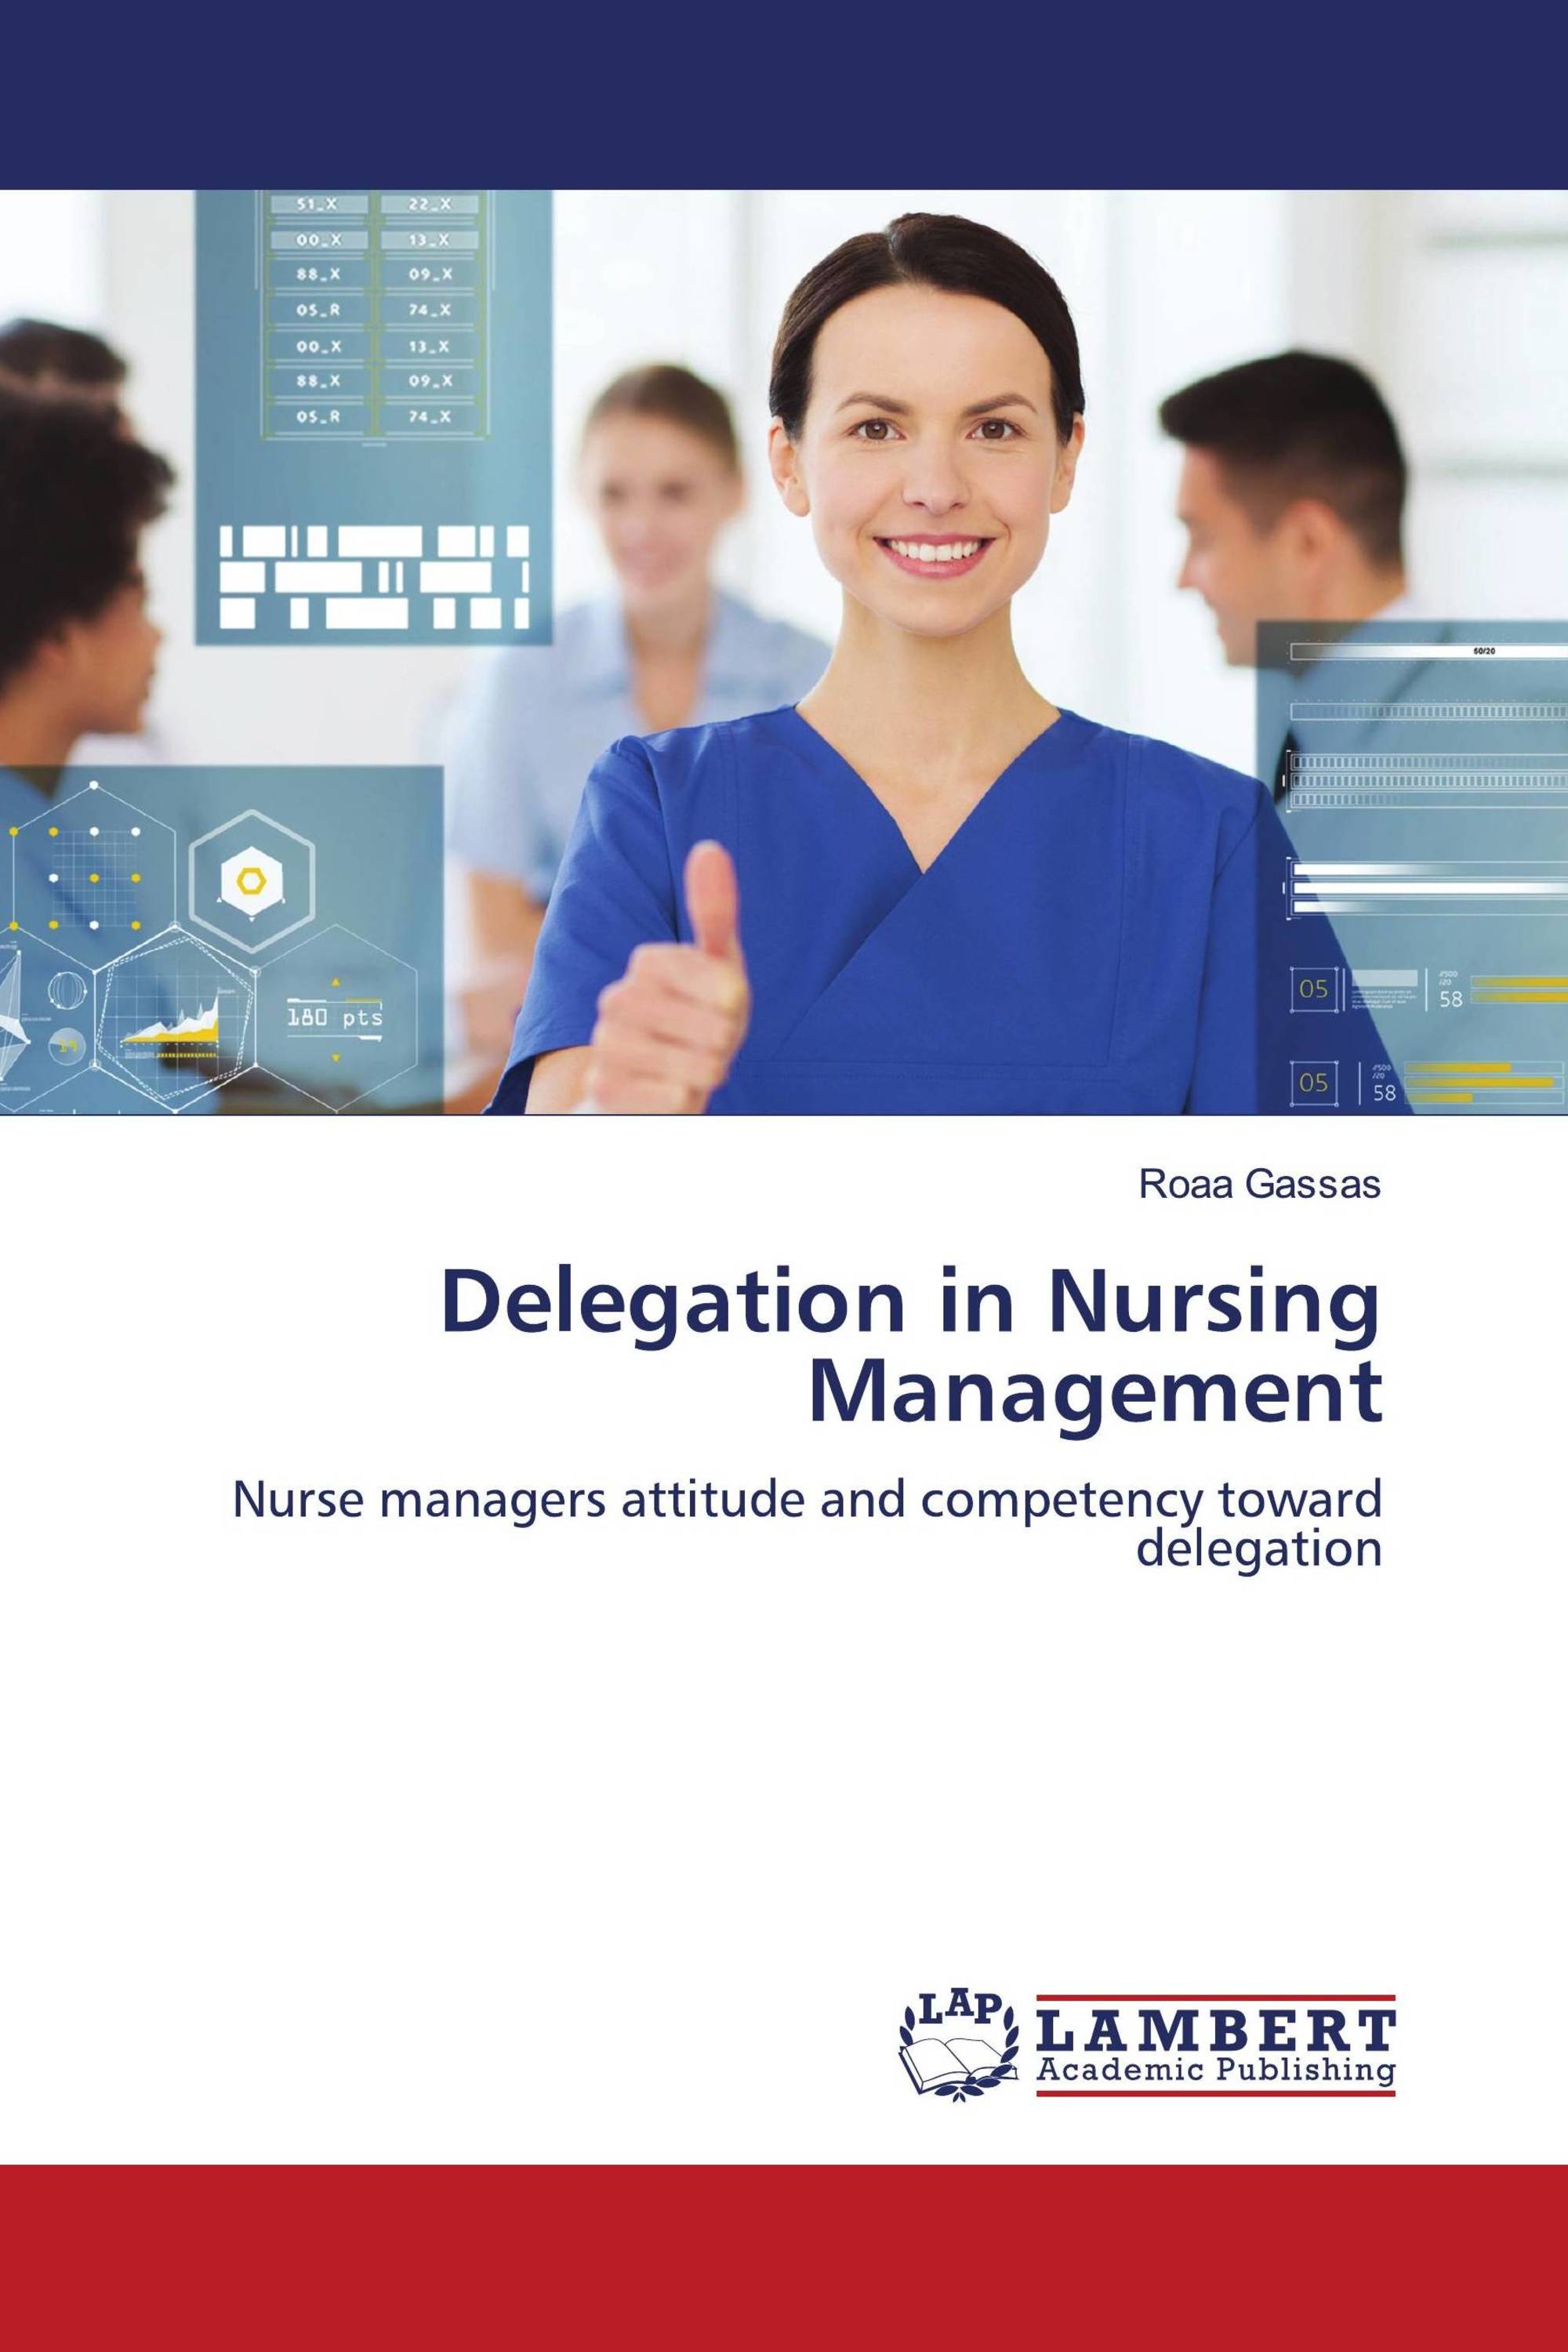 essay on delegation in nursing